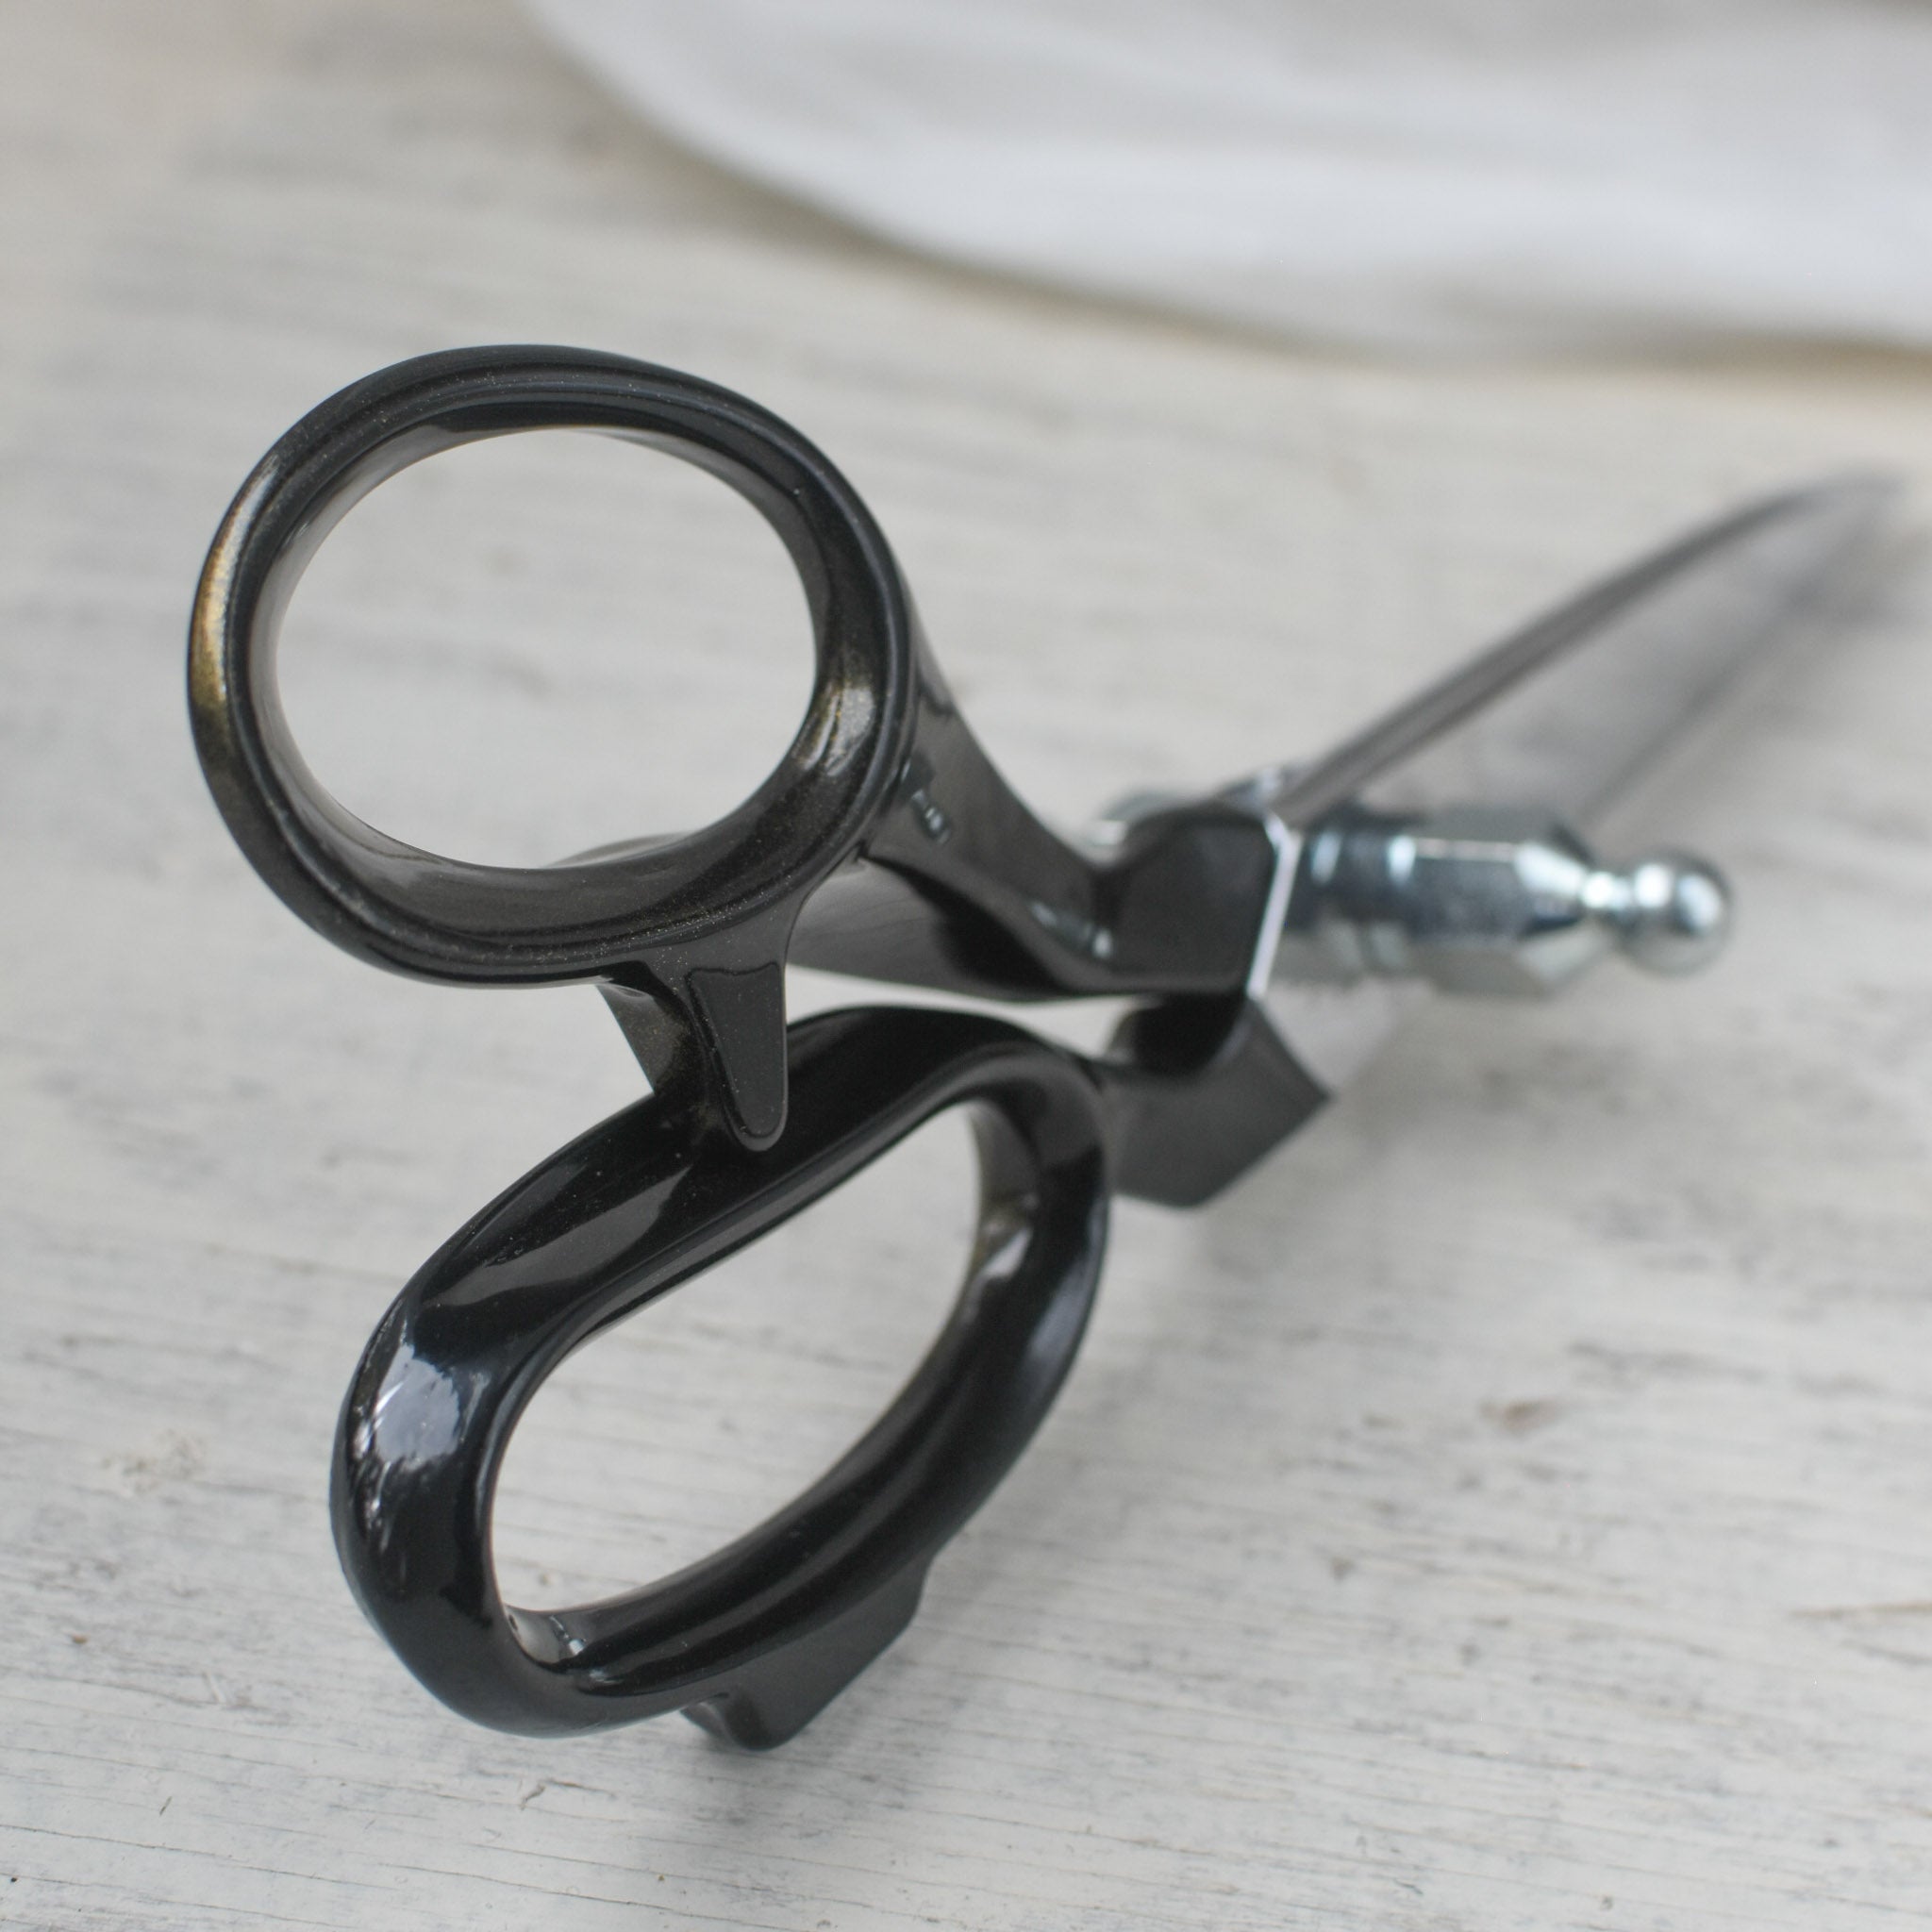 Scissors Sewing Scissors & Shears for Sale 